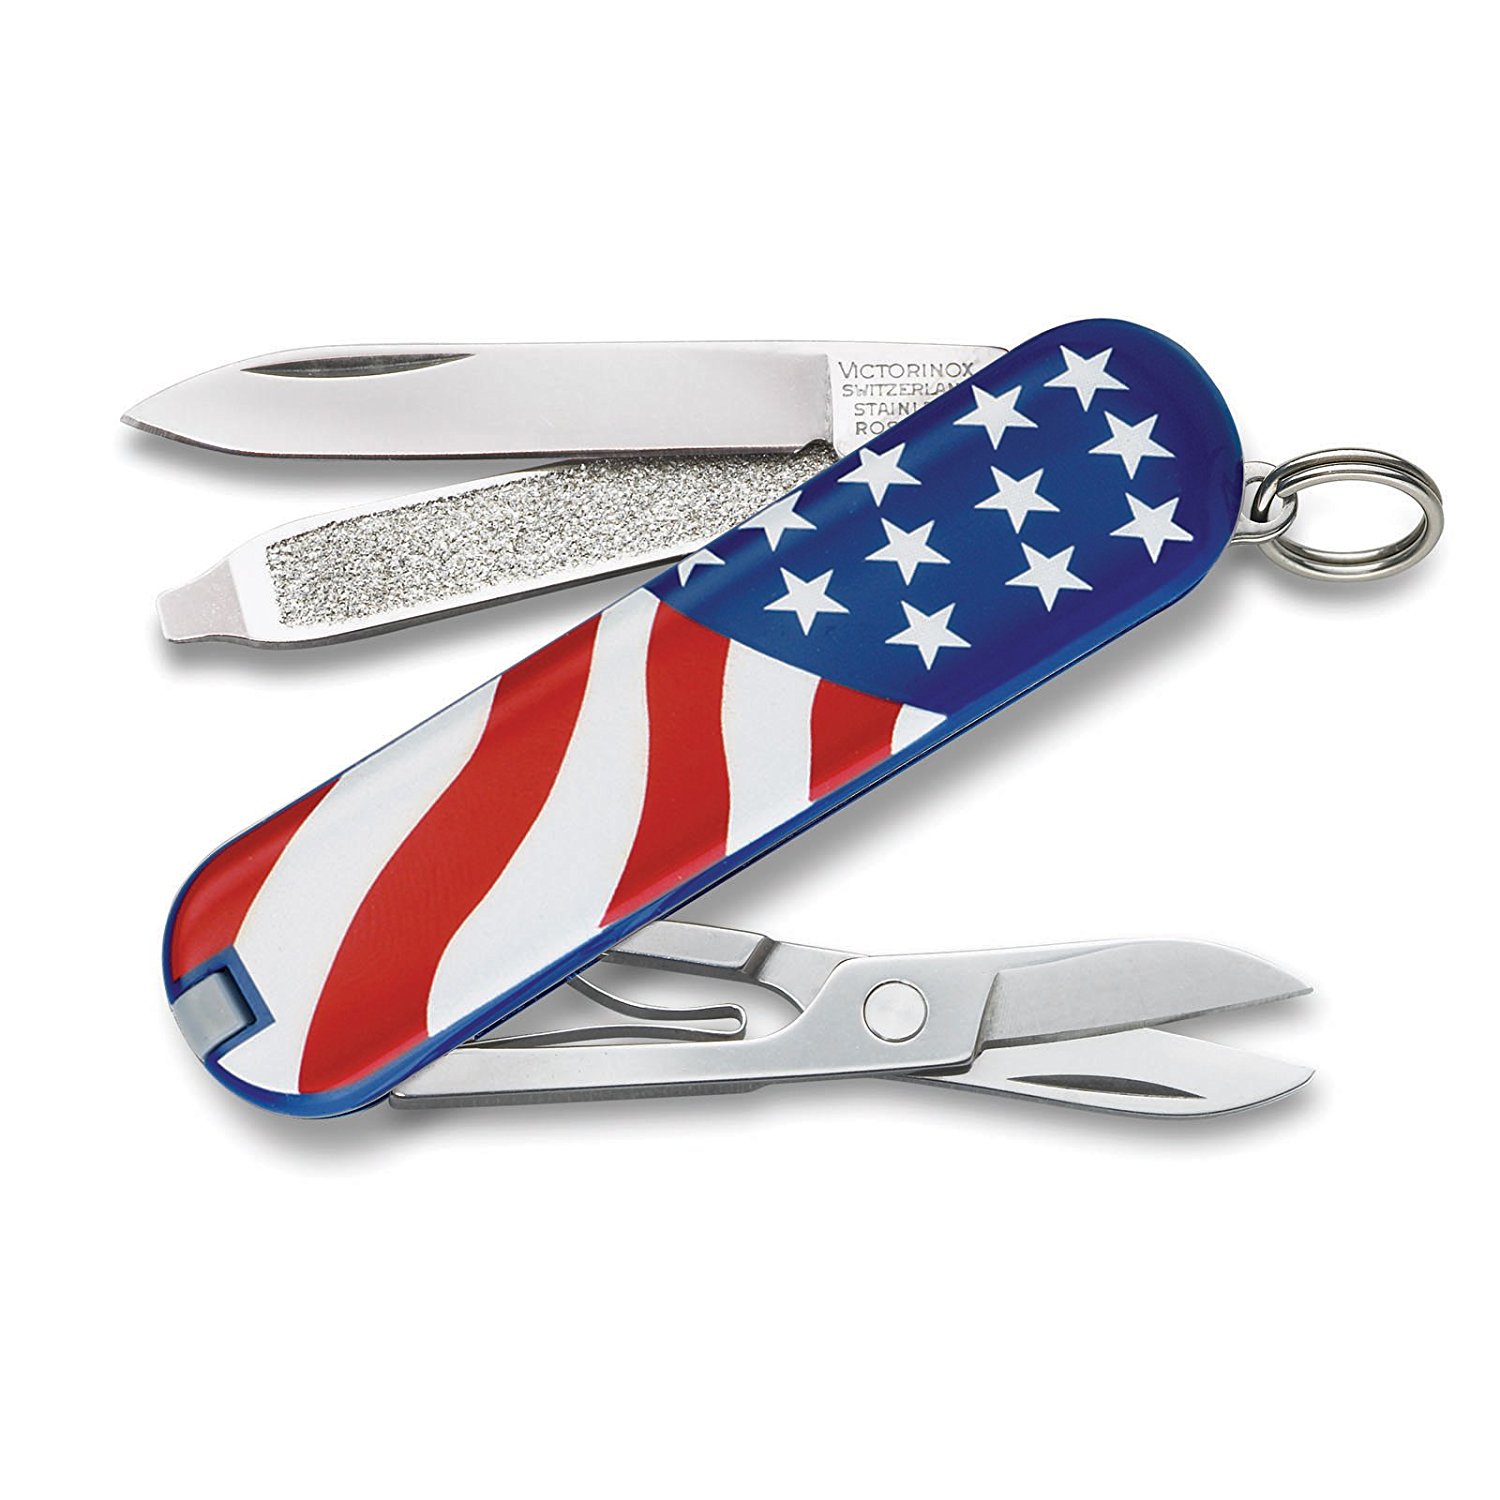 Victorinox Swiss Army Classic SD Pocket Knife – American Flag – Just $17.00!